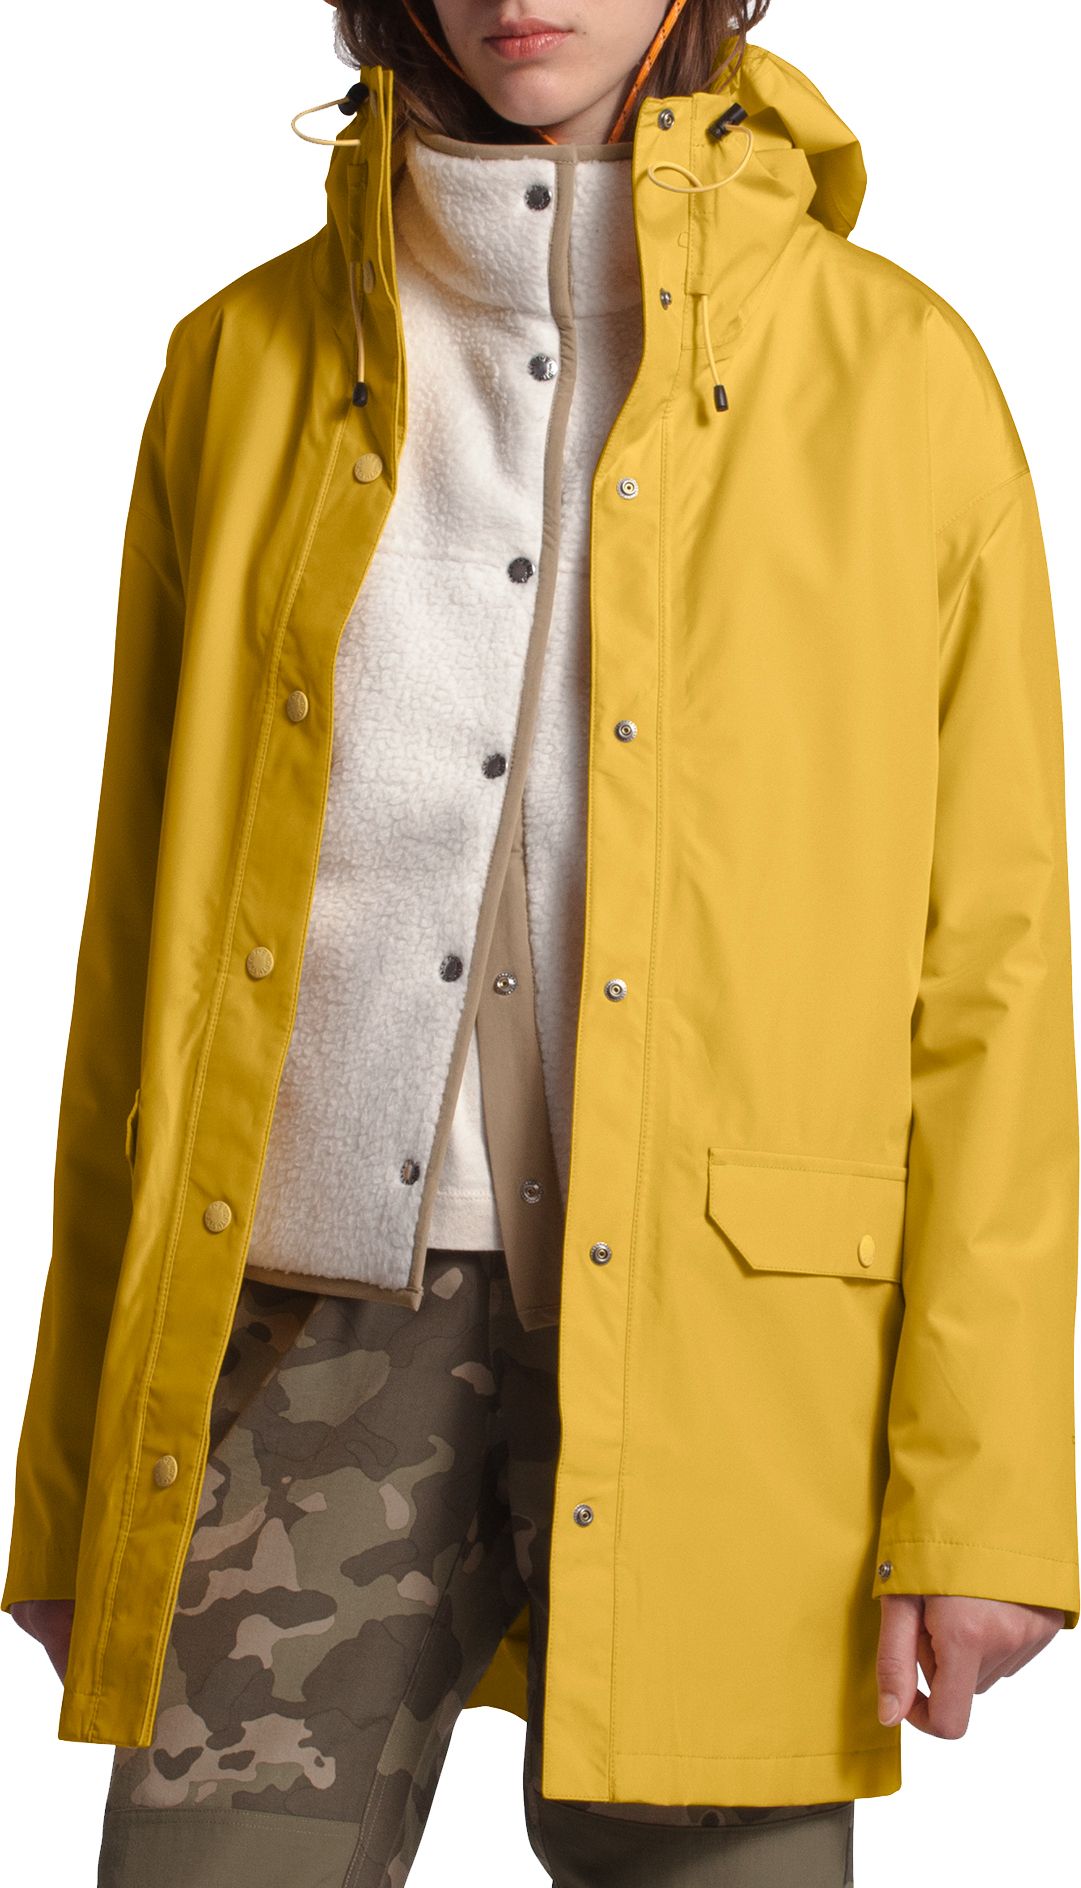 the north face yellow rain jacket